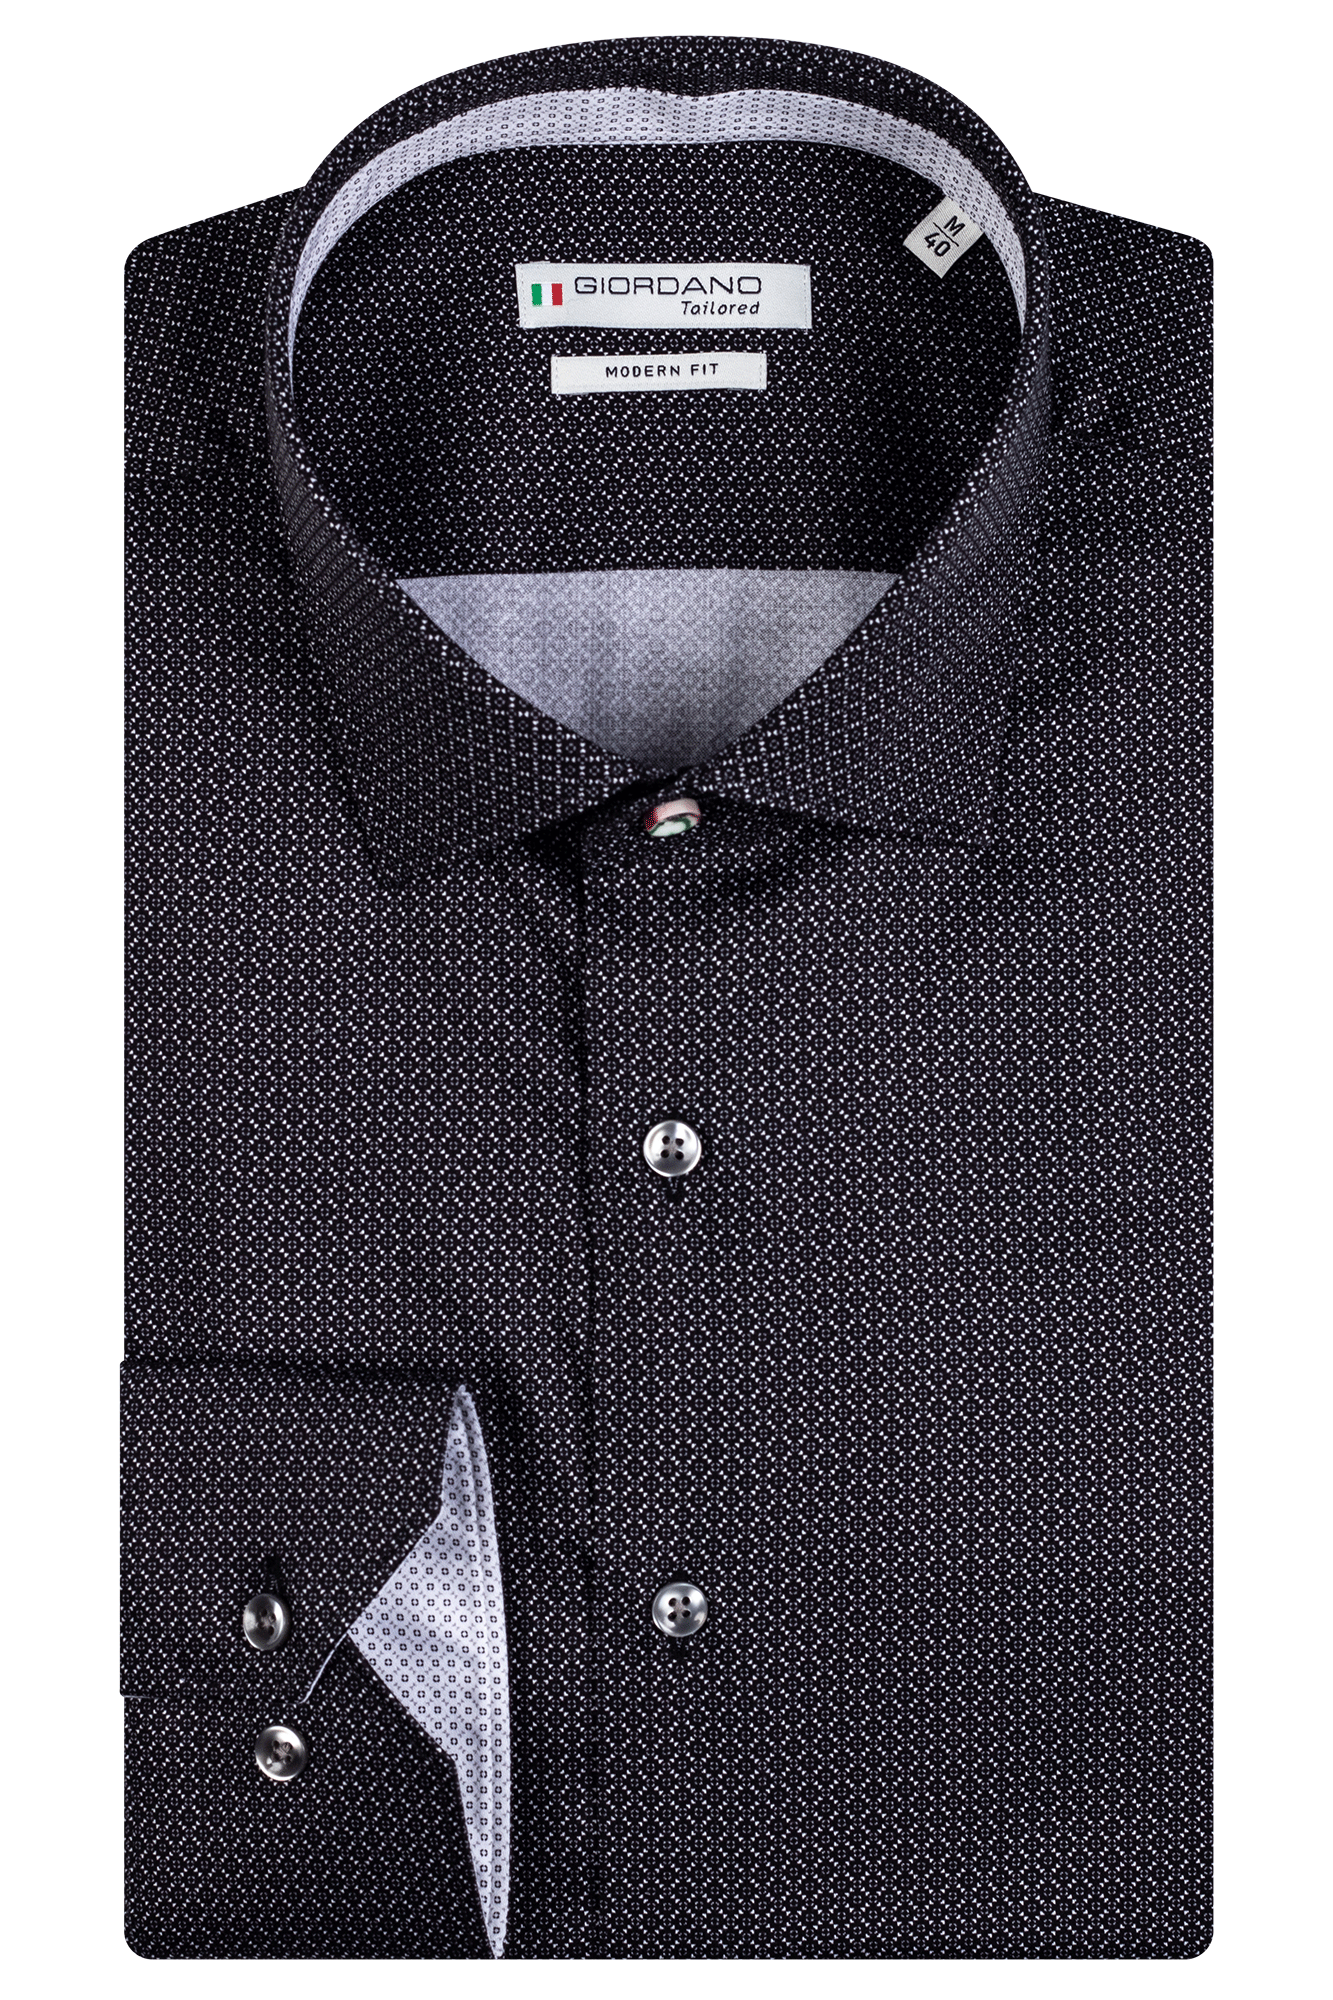 Giordano Black Print Cotton Shirt